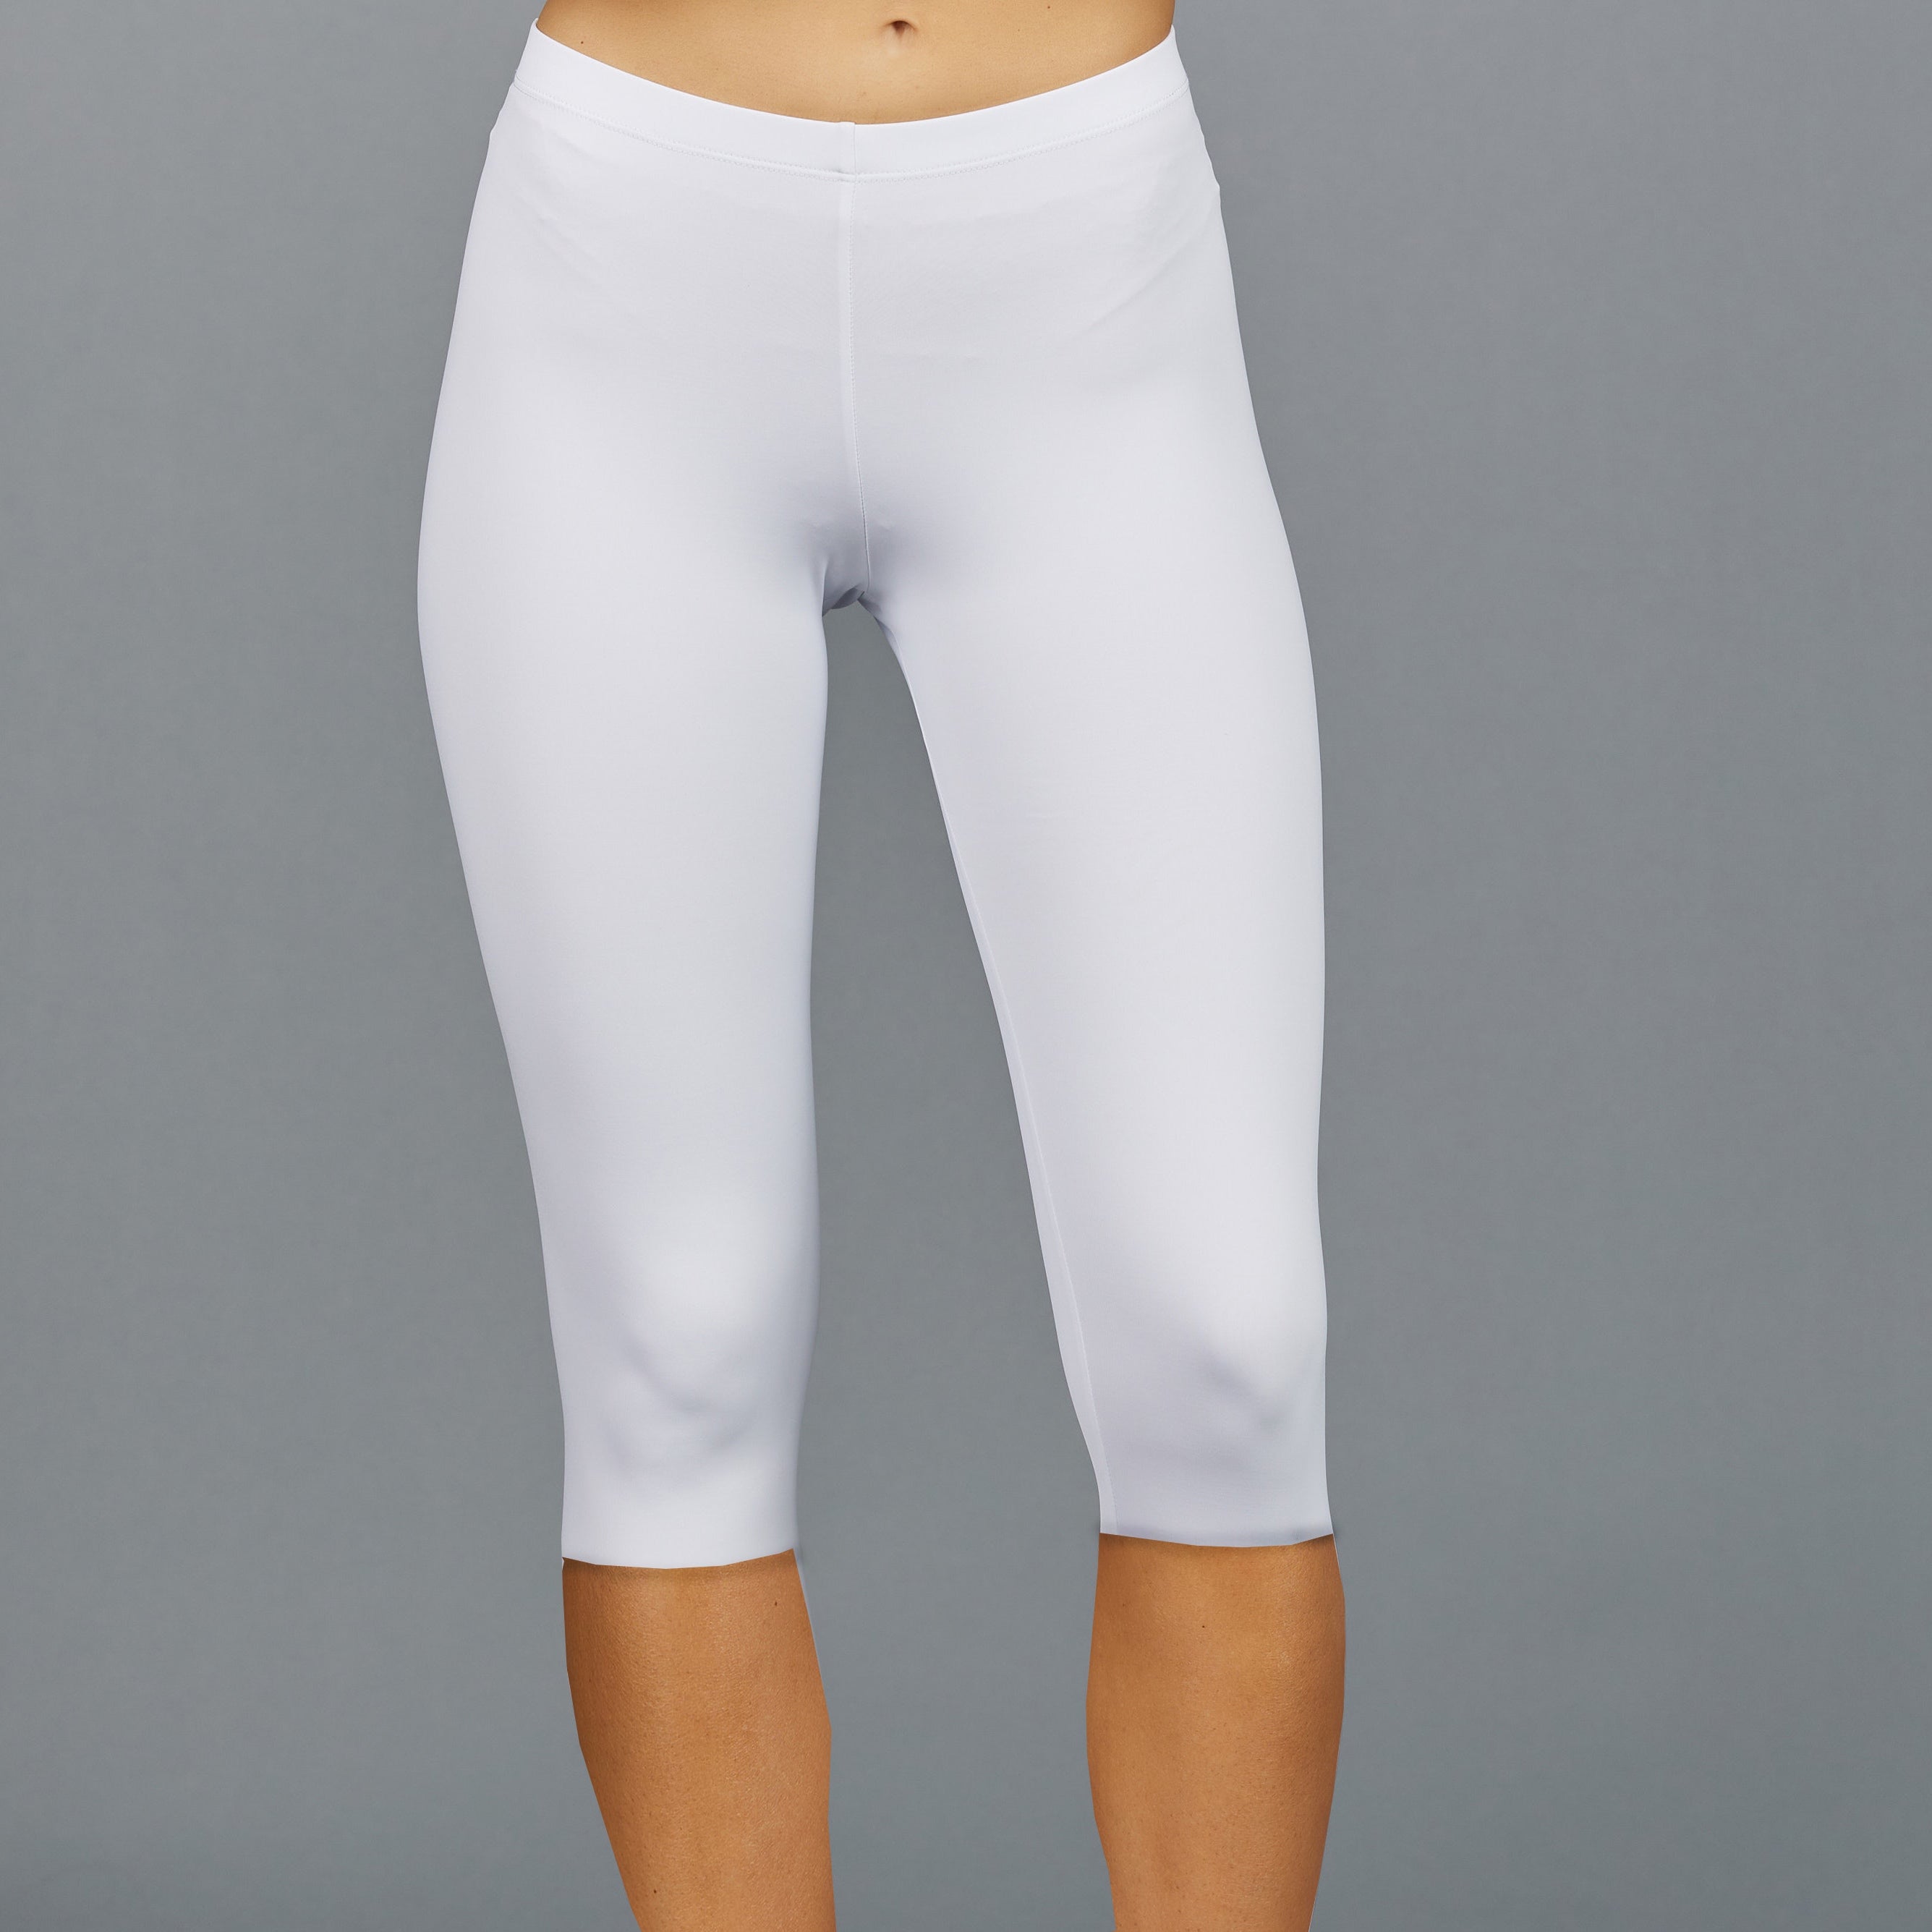 women's Tangerine activewear crop pants size XL black/white